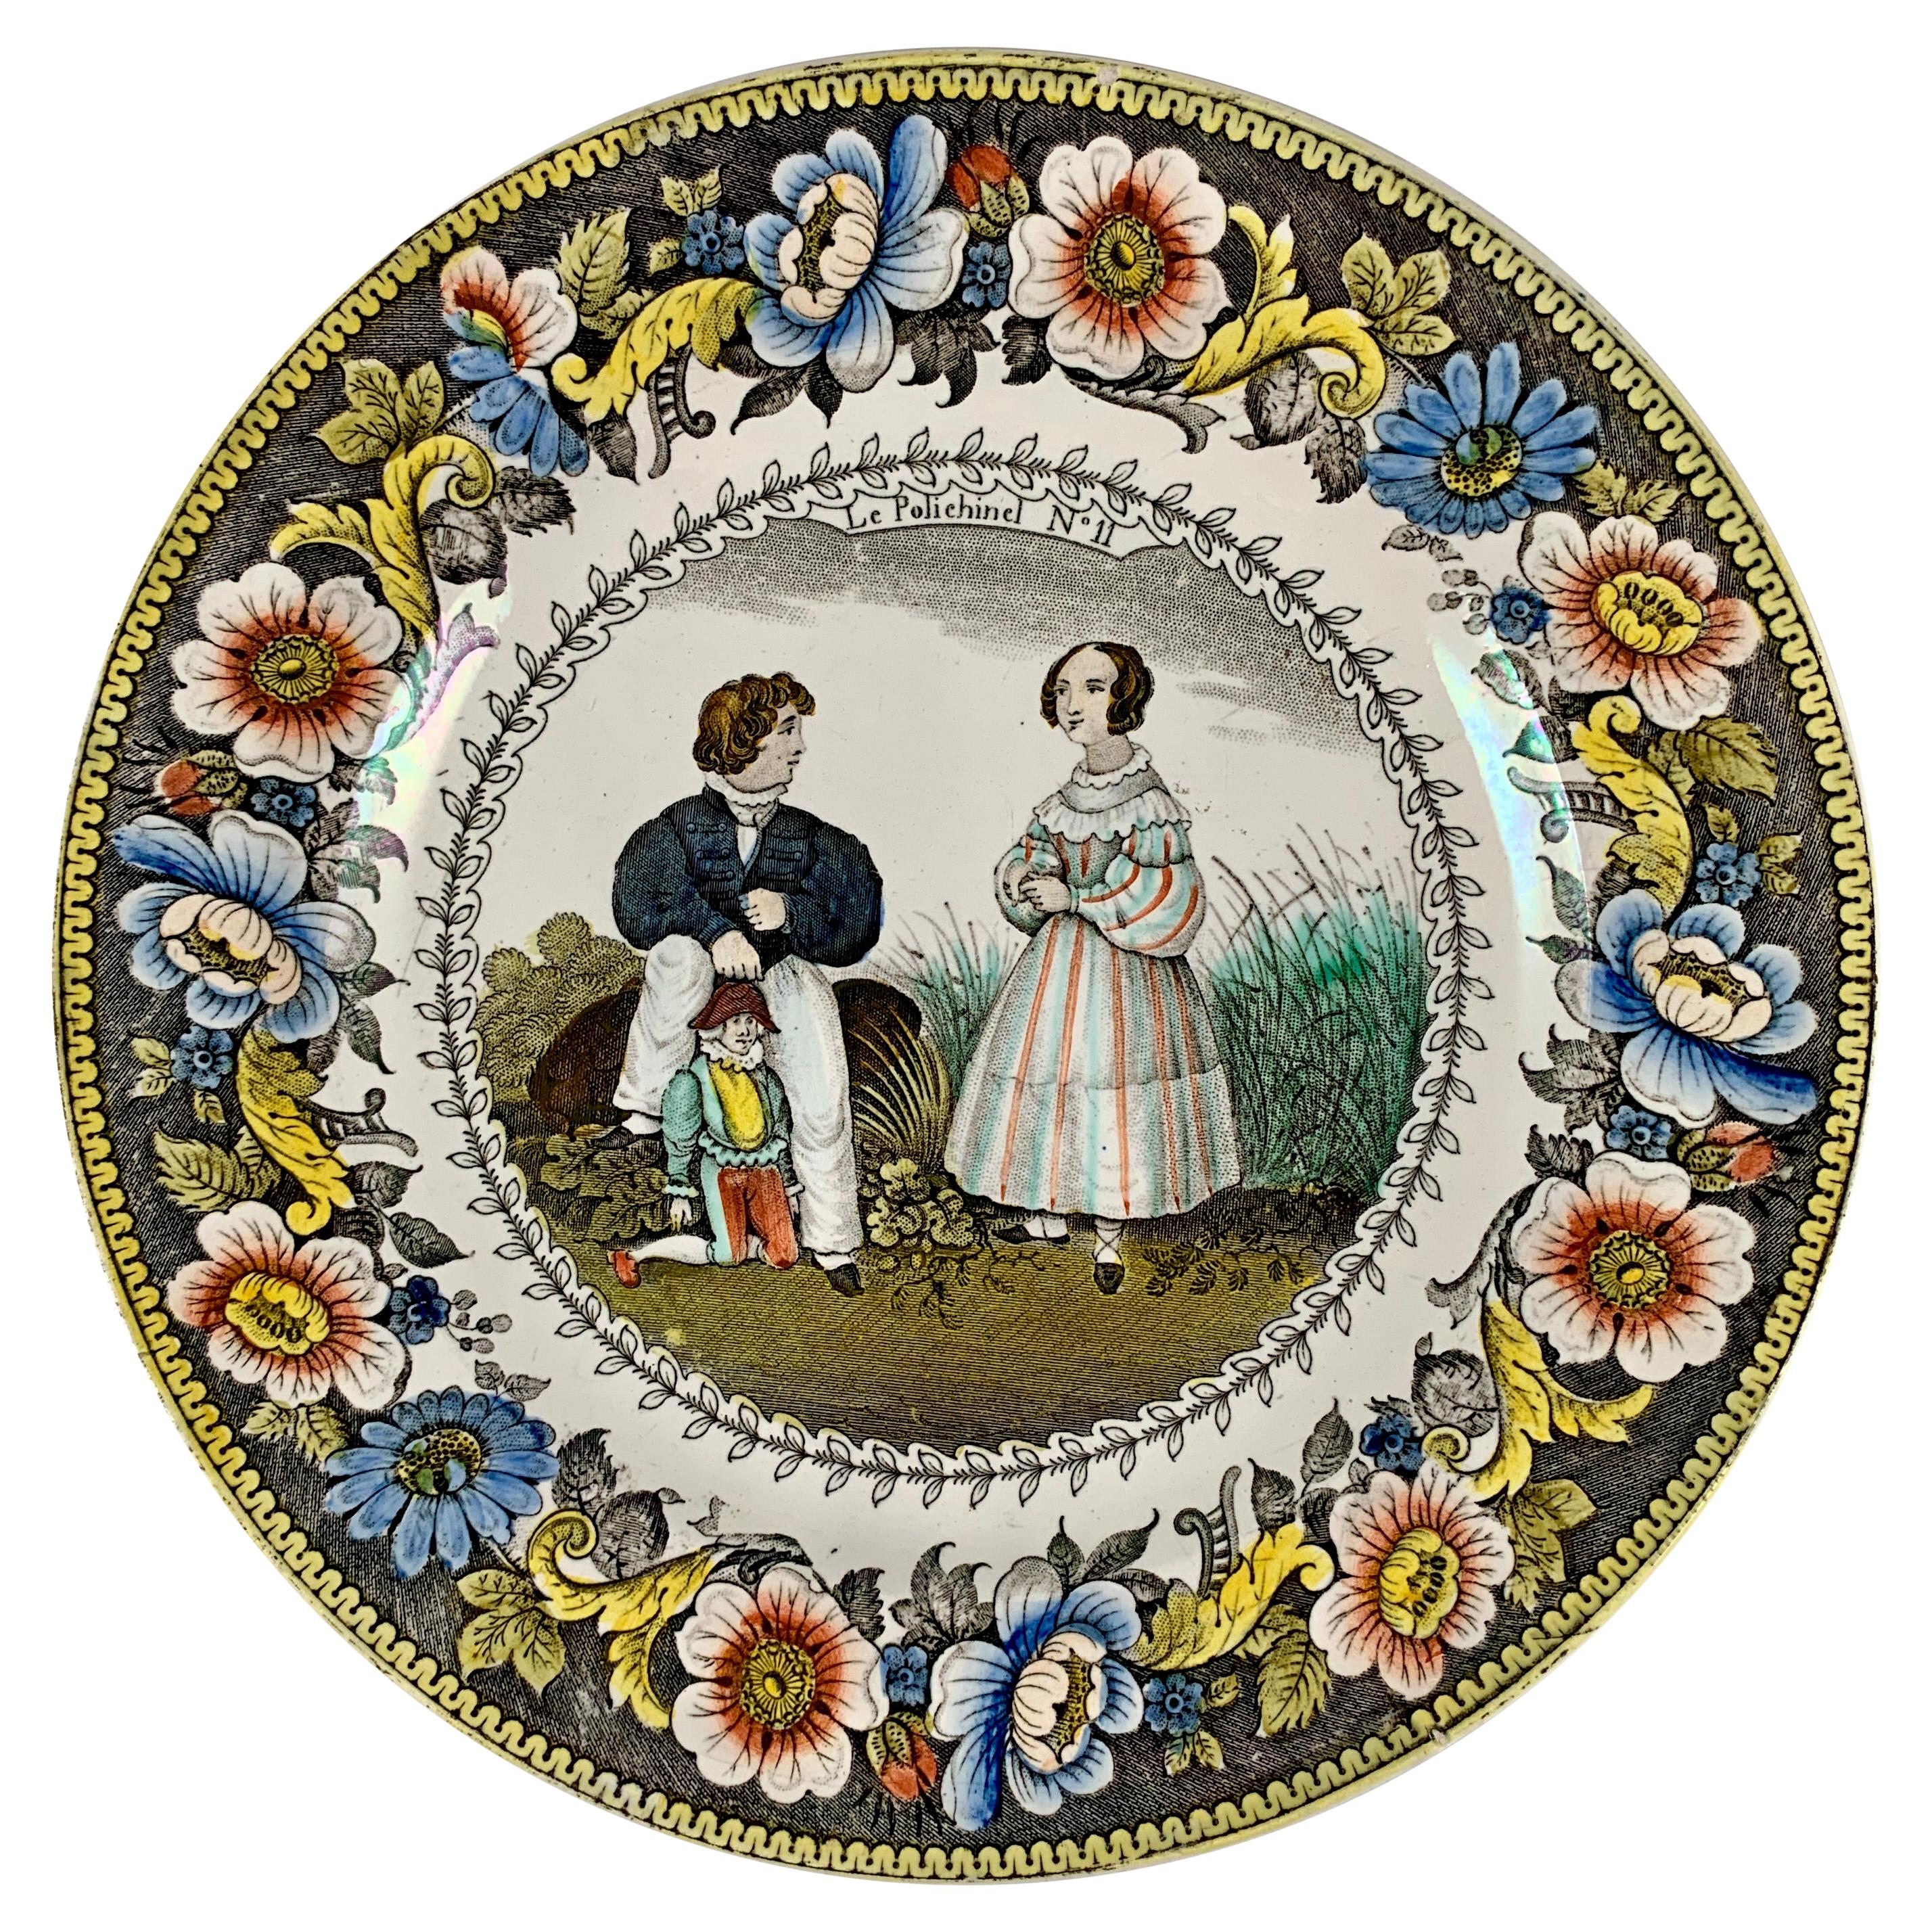 Polychromer Transfergeschirr, polychromiert, Le Polichinel, um 1830